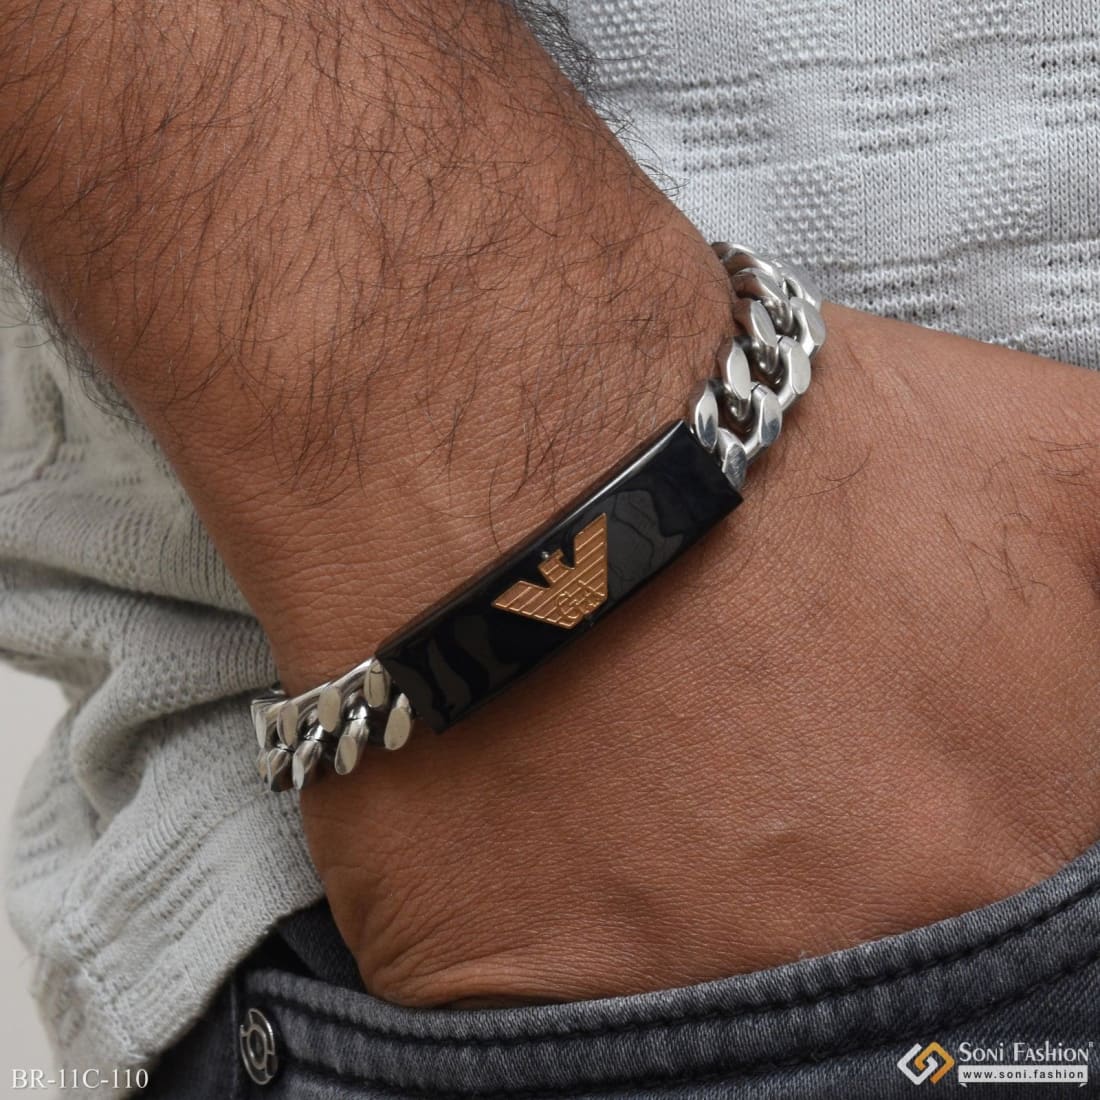 Emporio Armani Leather Cord Bracelet, Black at John Lewis & Partners